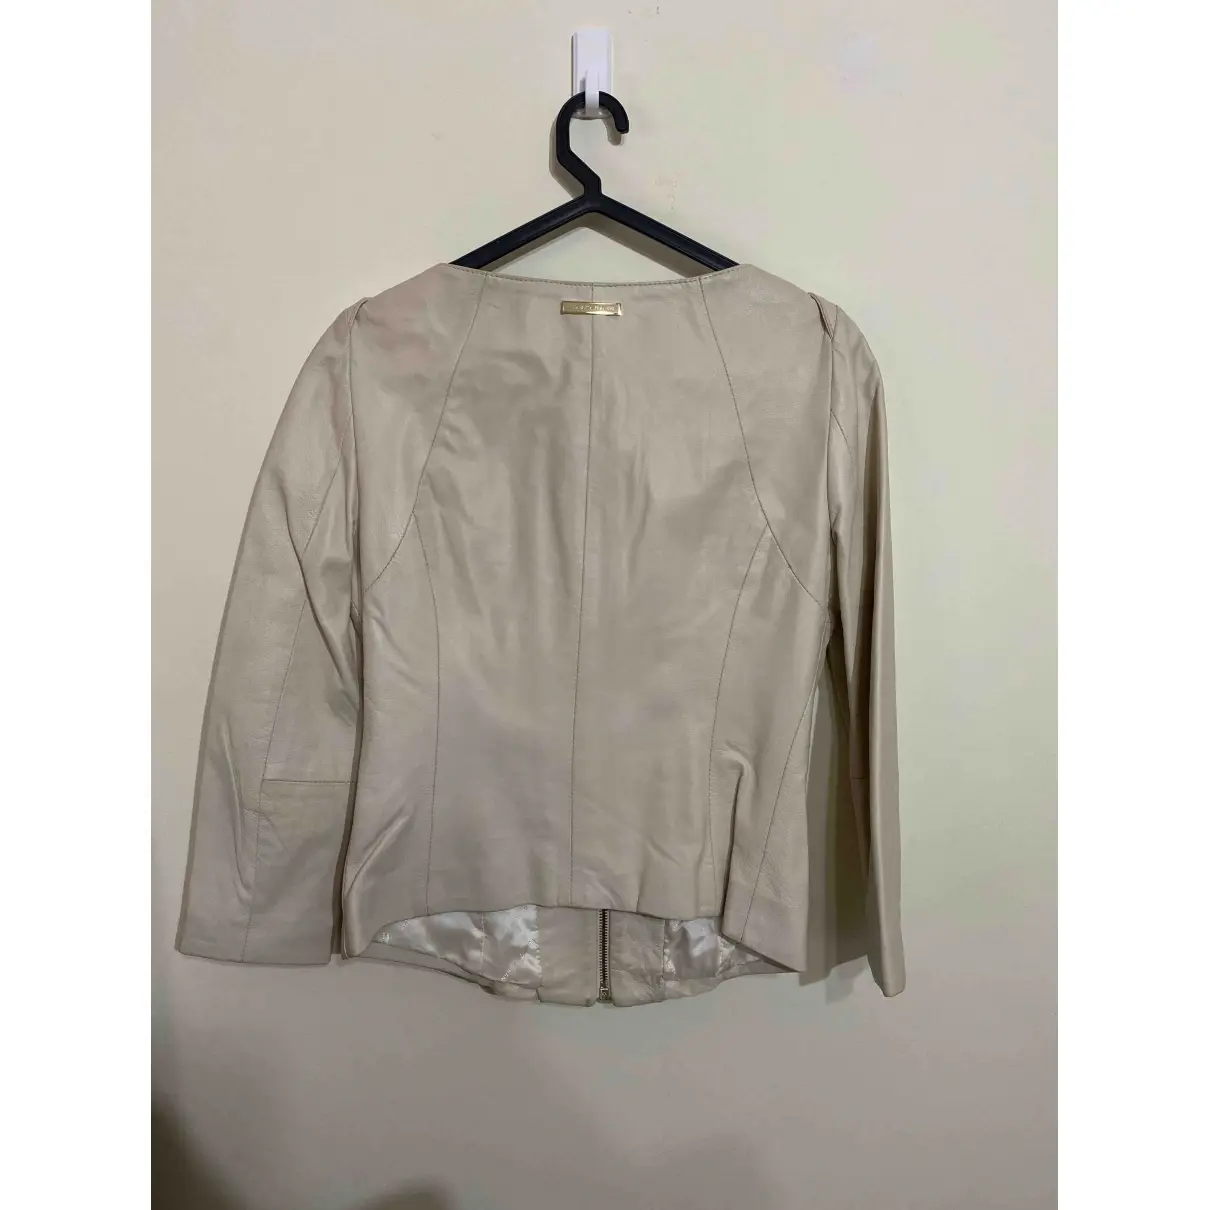 Buy Elisabetta Franchi Leather jacket online